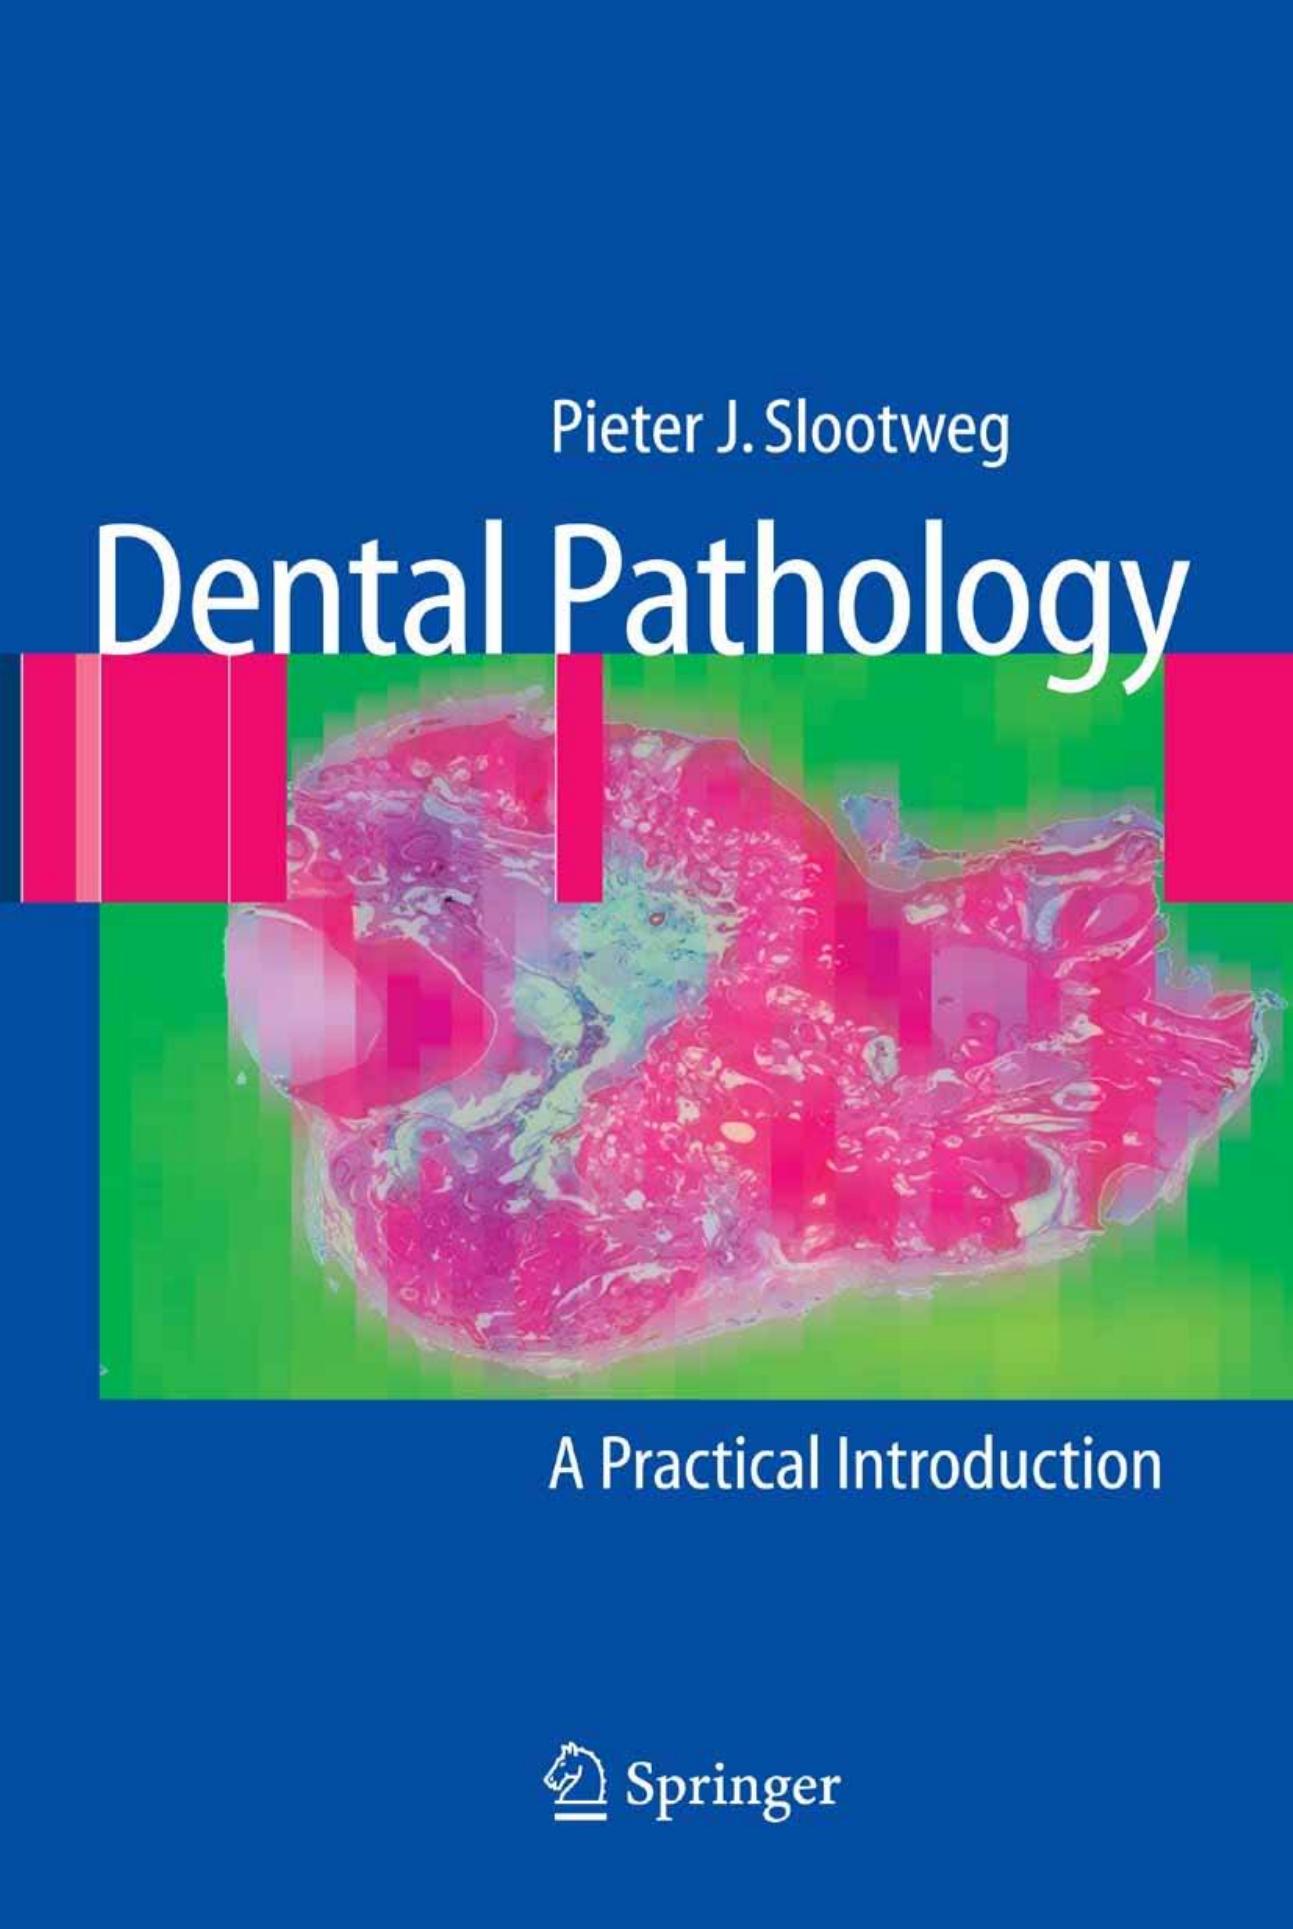 Dental Pathology, 2007